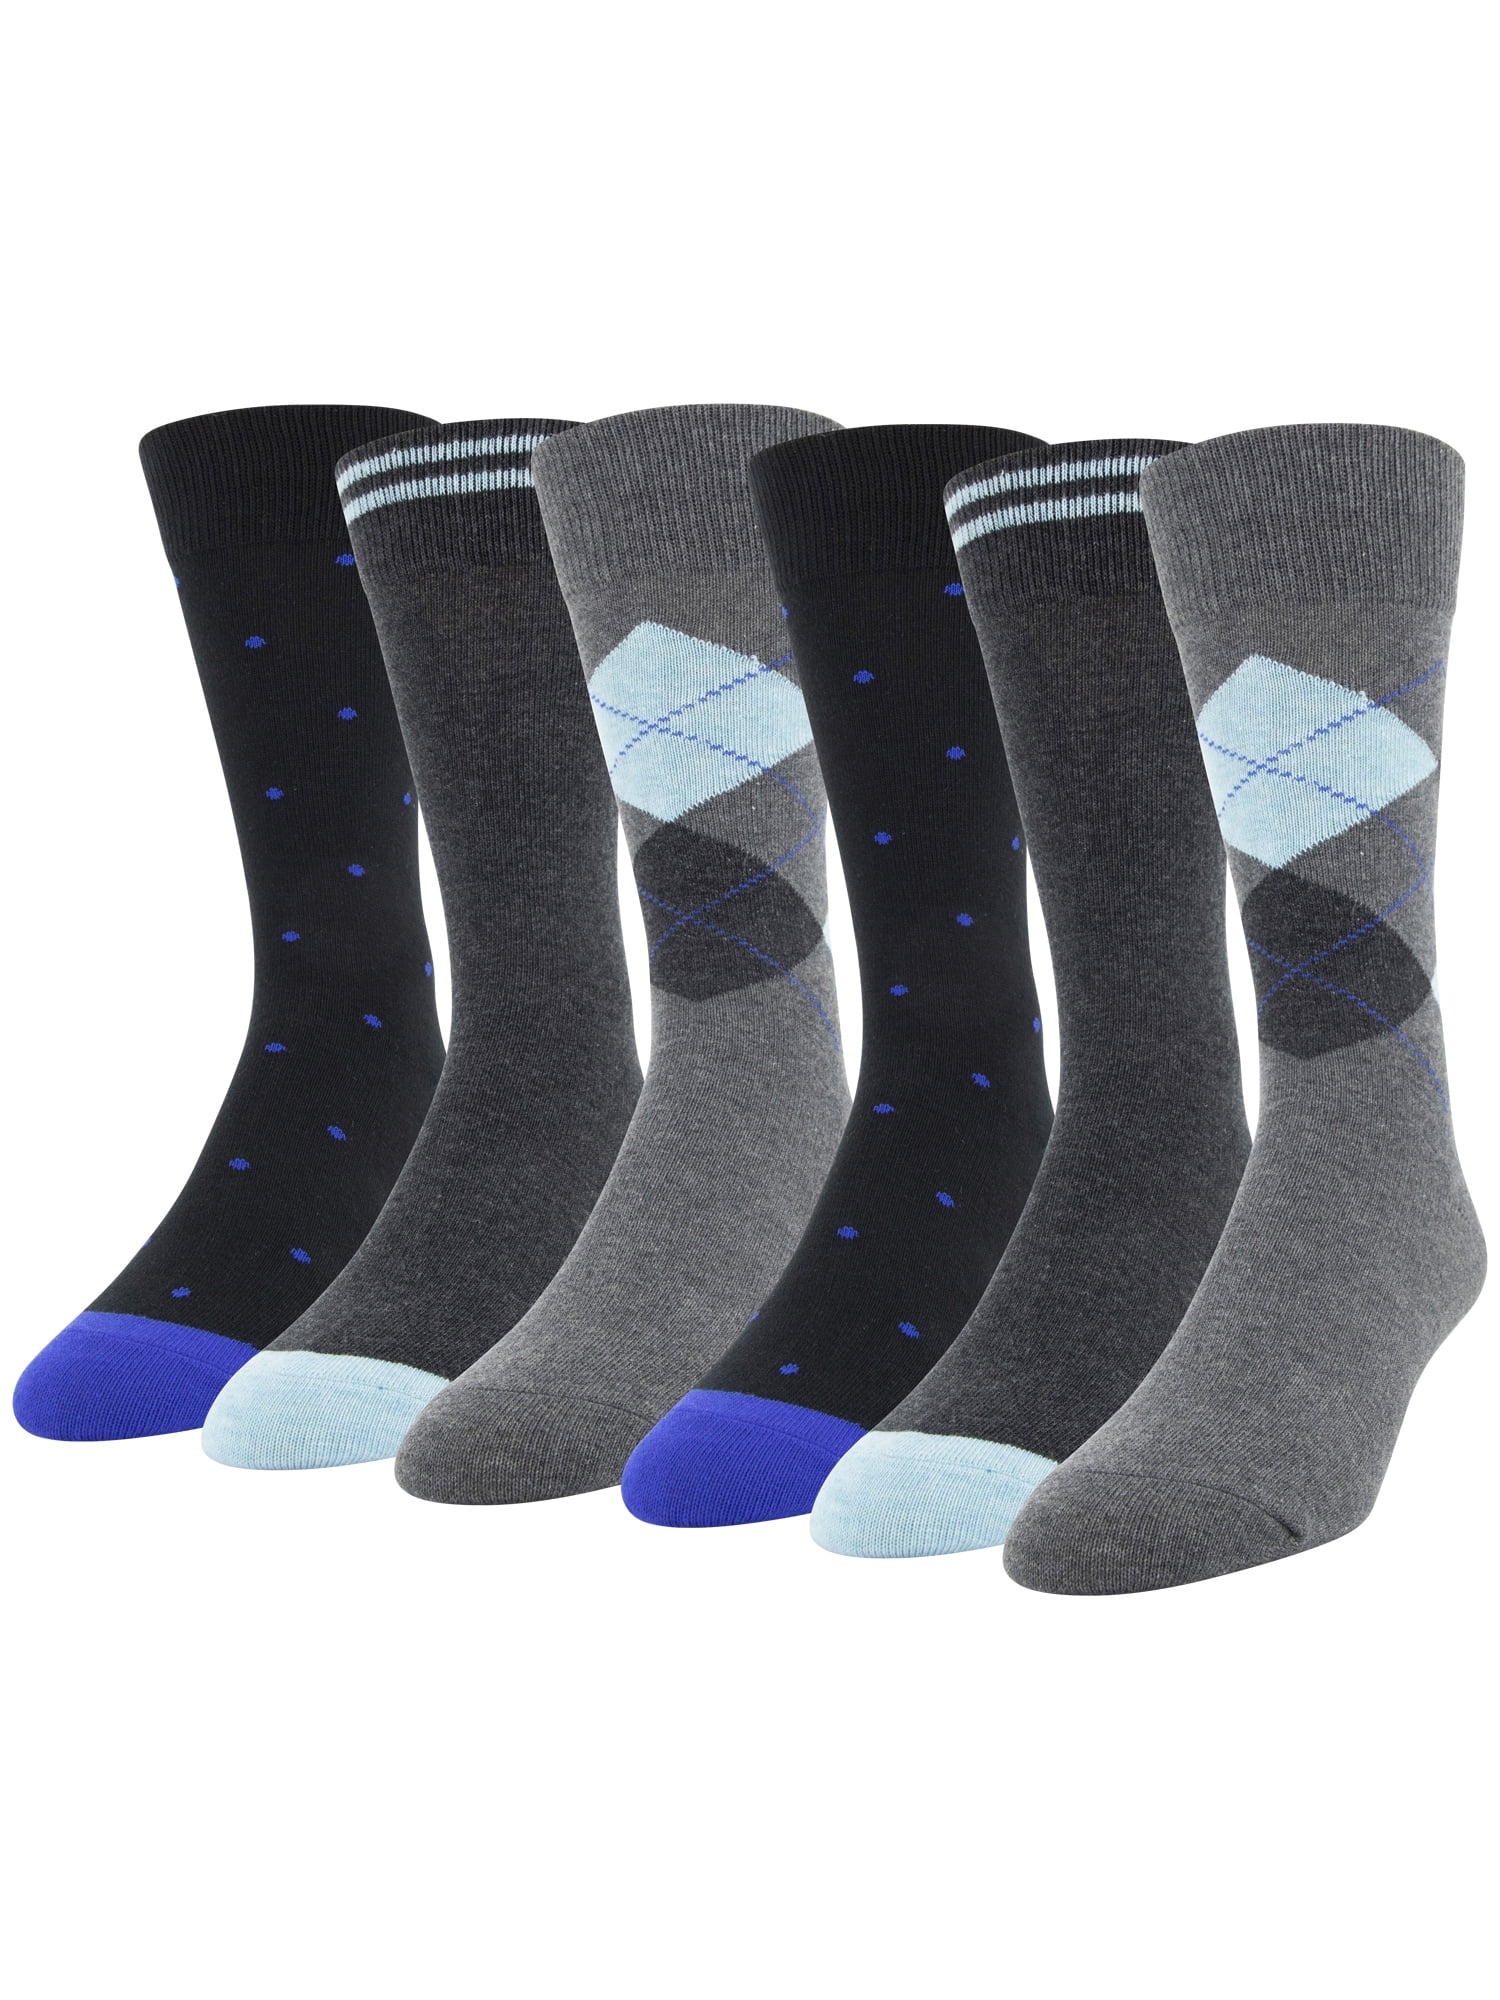 George Men's Argyle Dress Crew Socks, 6 Pairs - Walmart.com